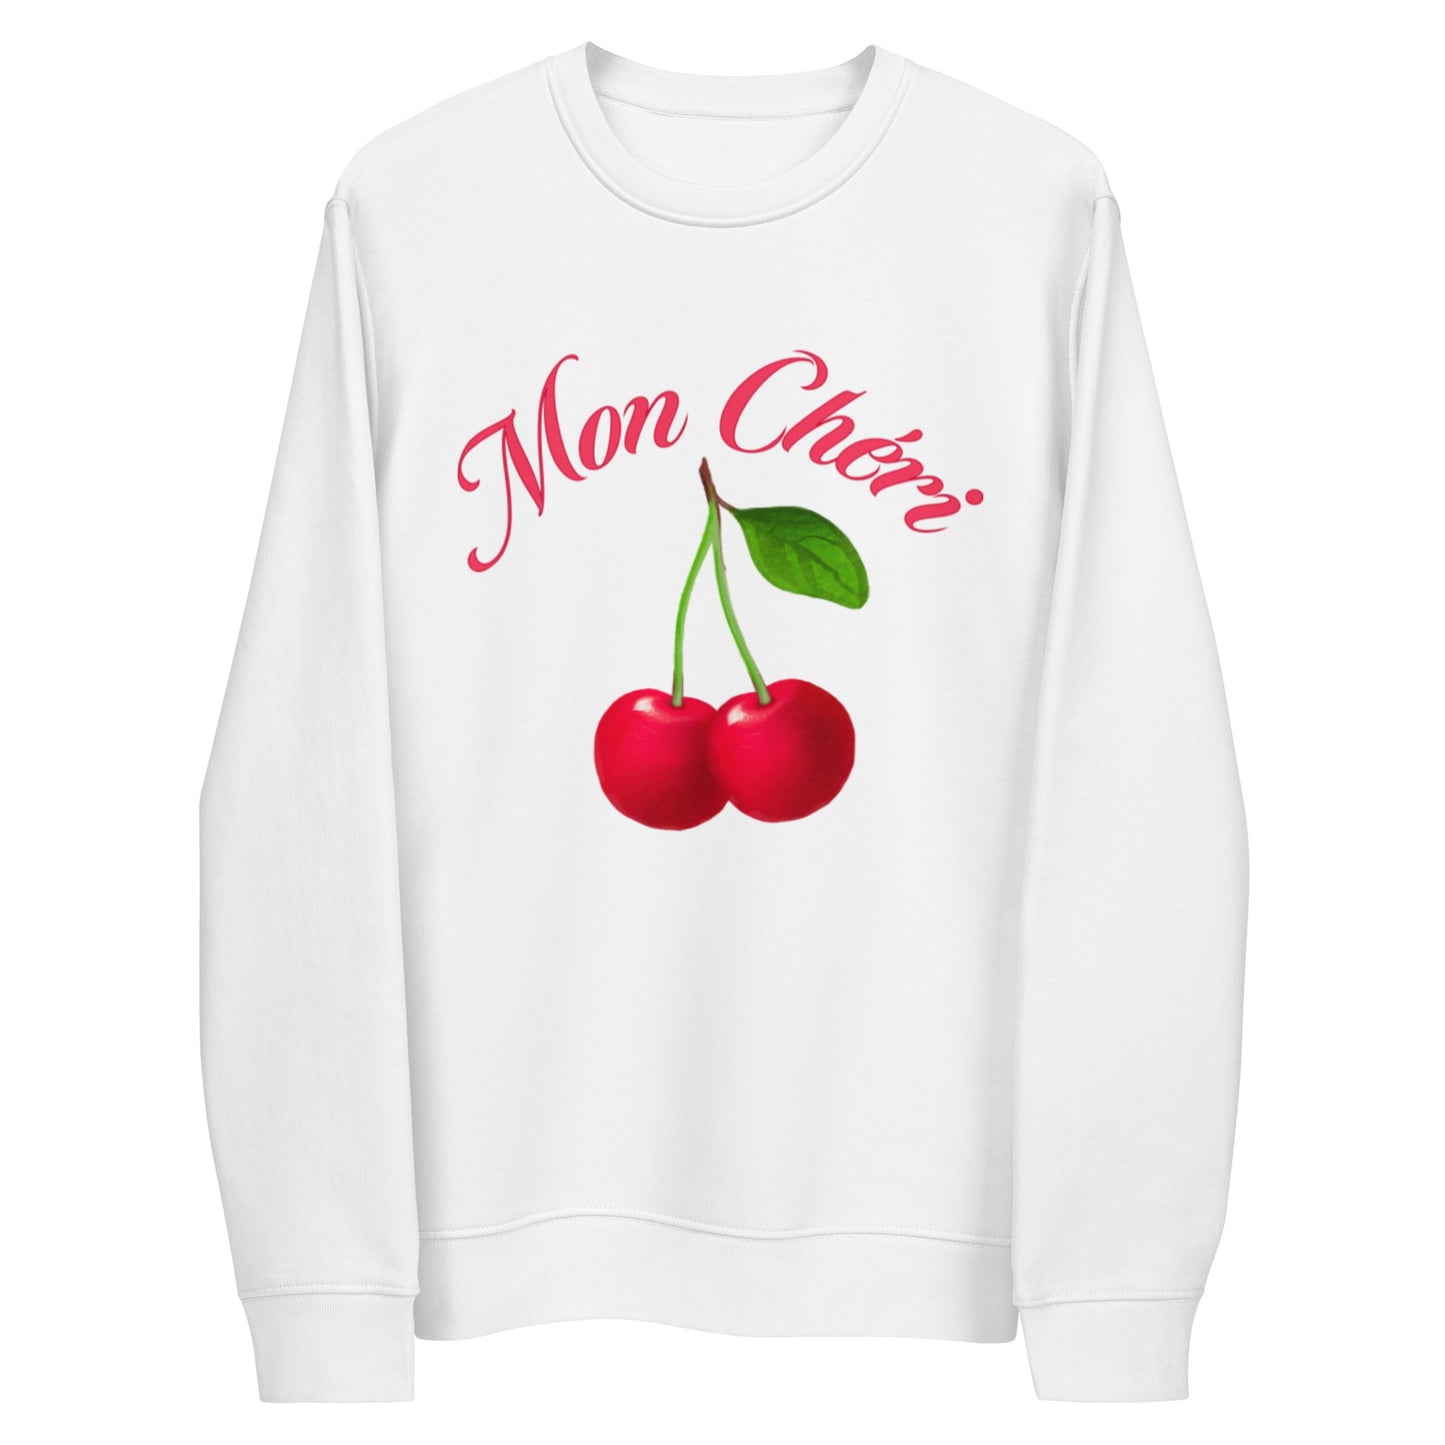 Mon Cherie White Unisex Eco Organic Sweatshirt